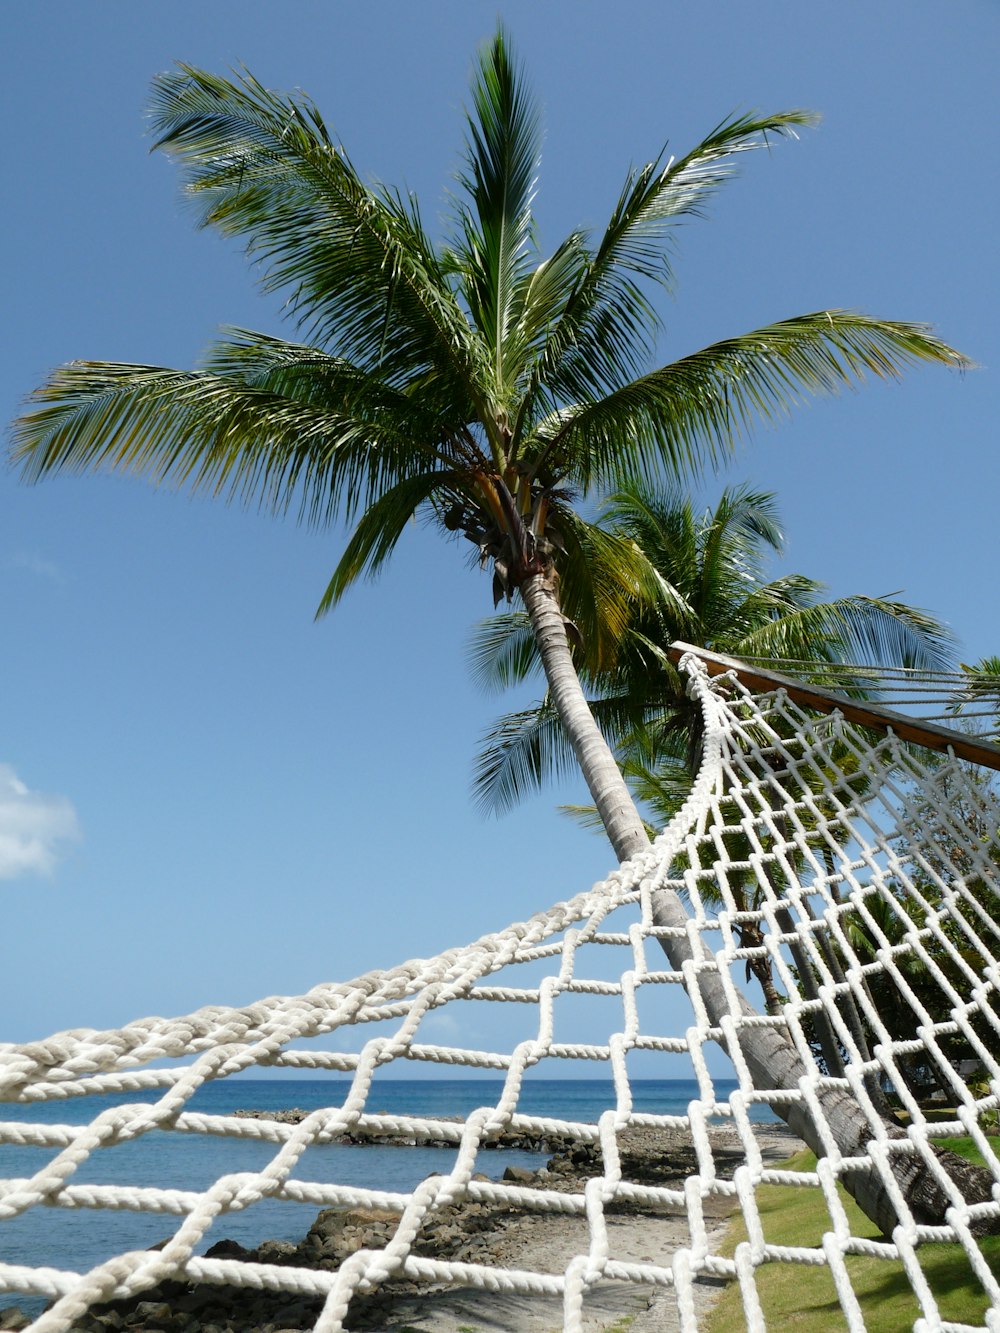 scenery of a hammock on a green palm tree